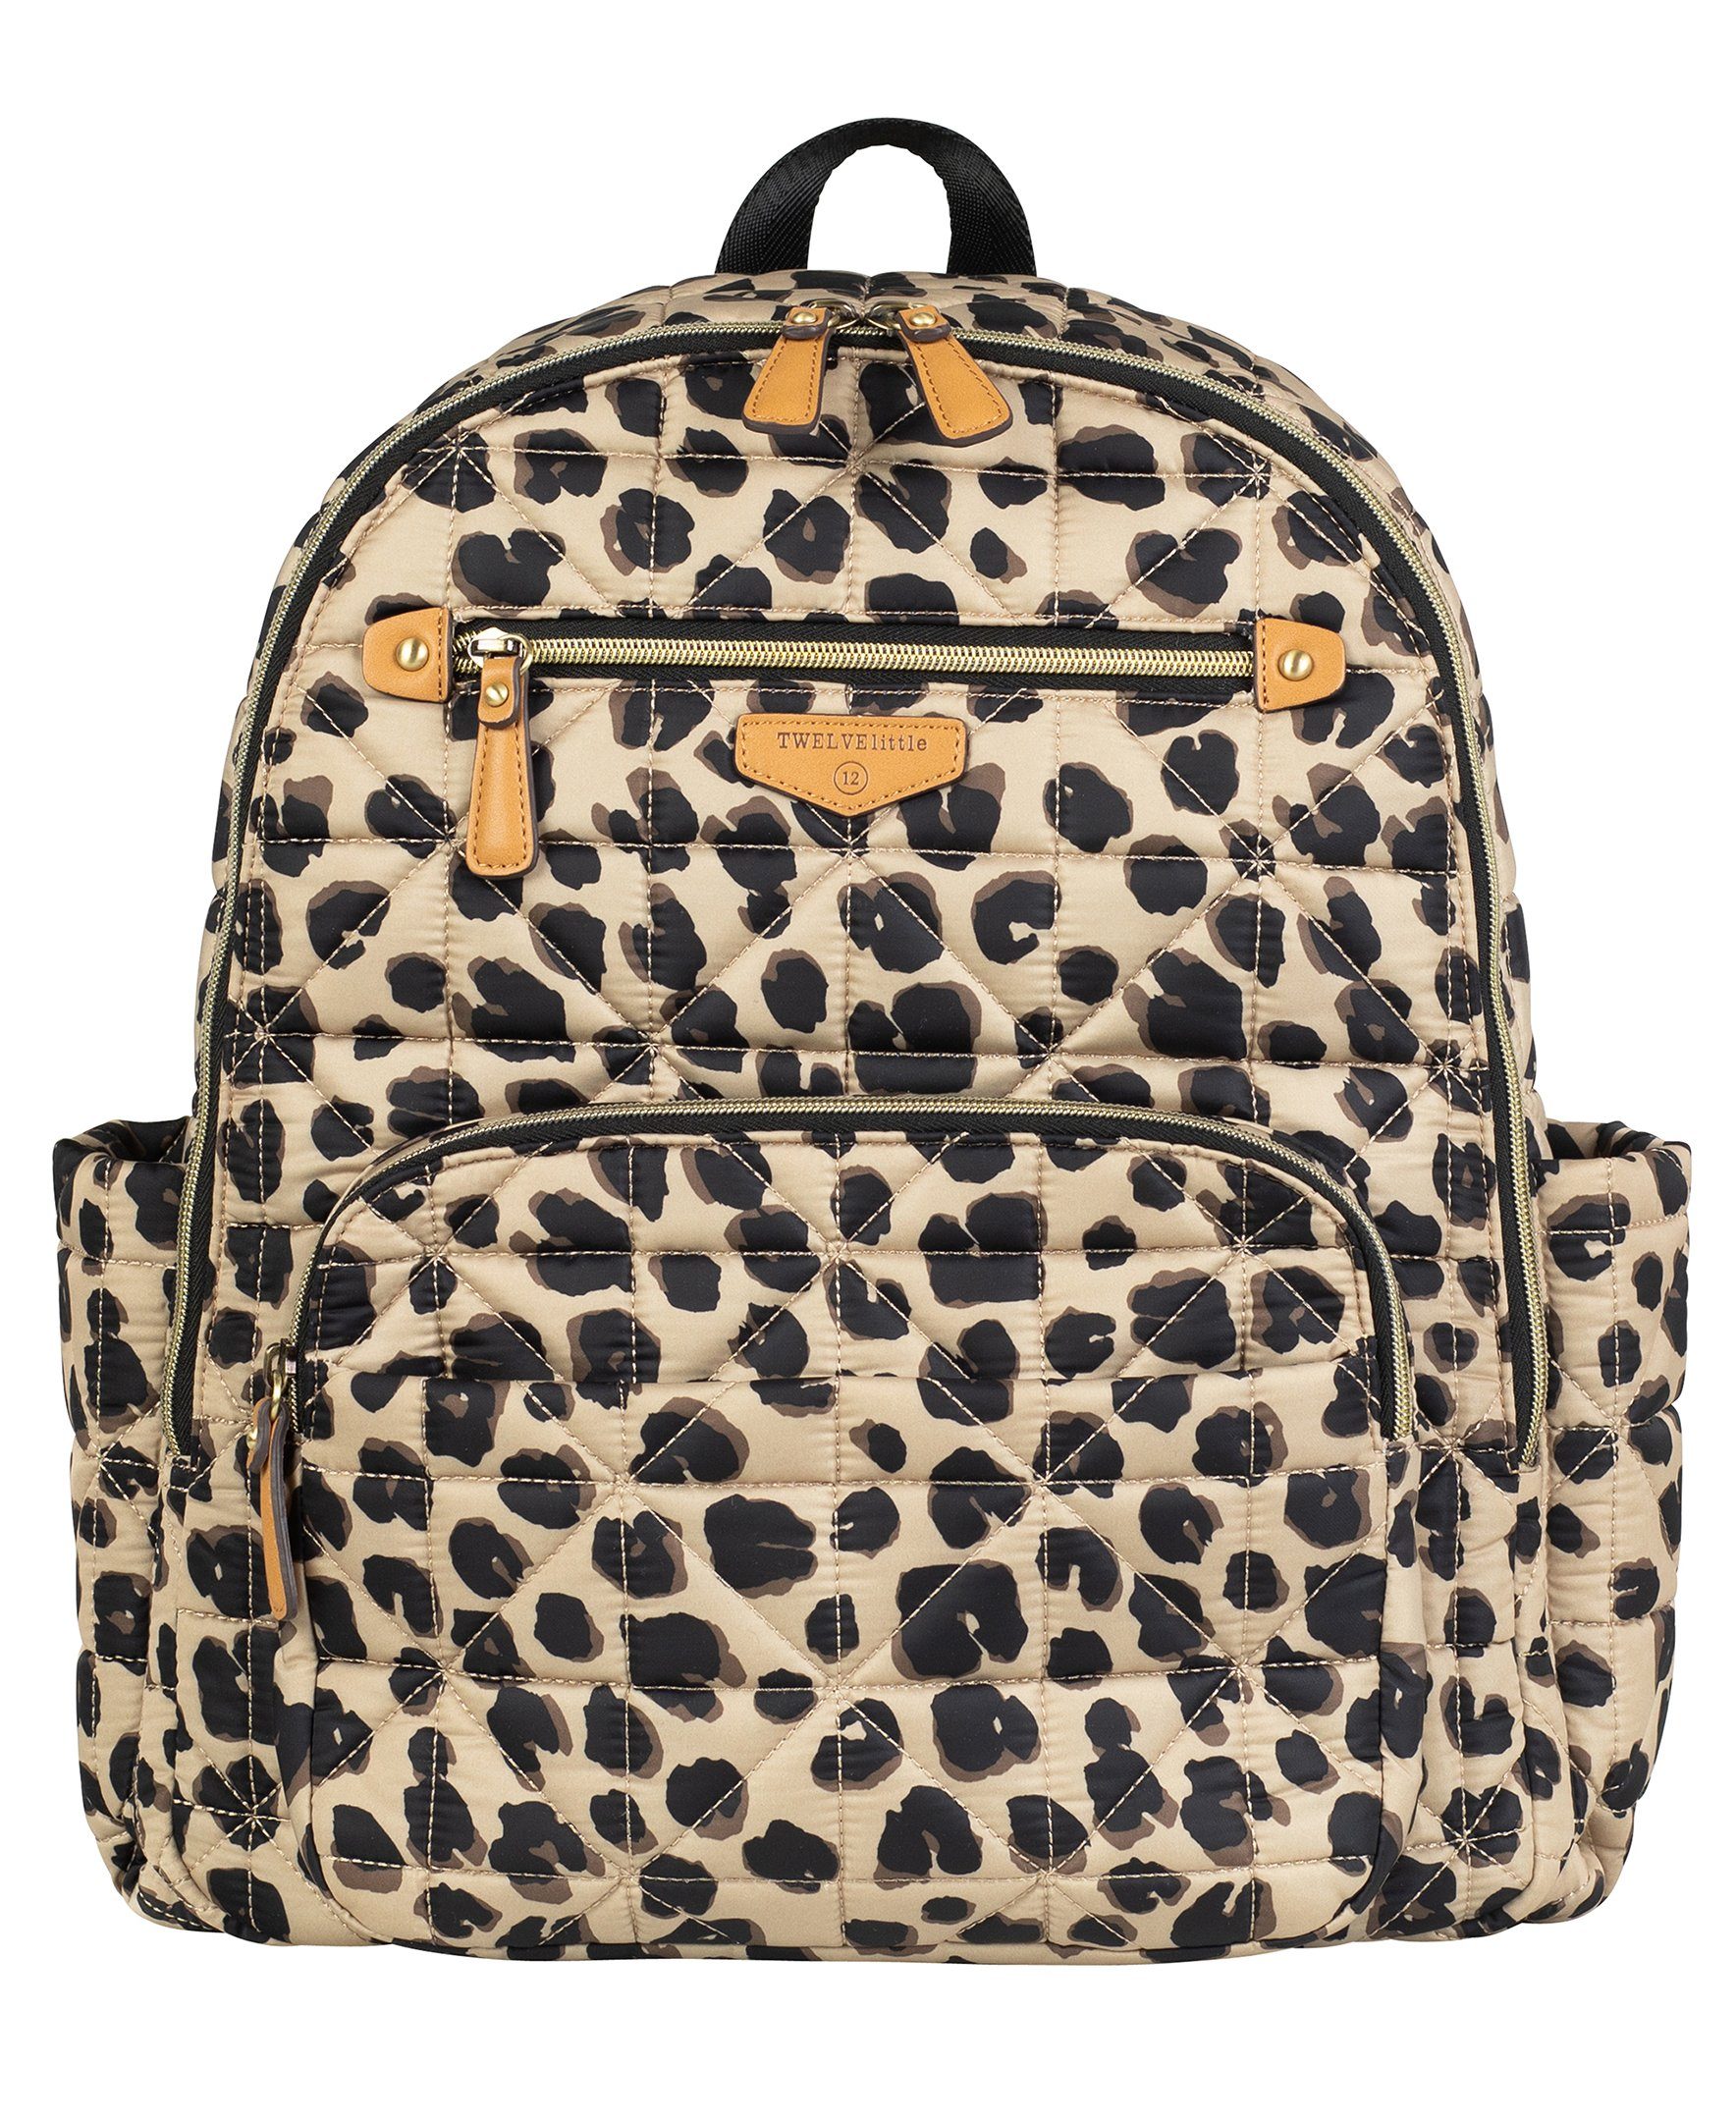 Companion Backpack - Leopard